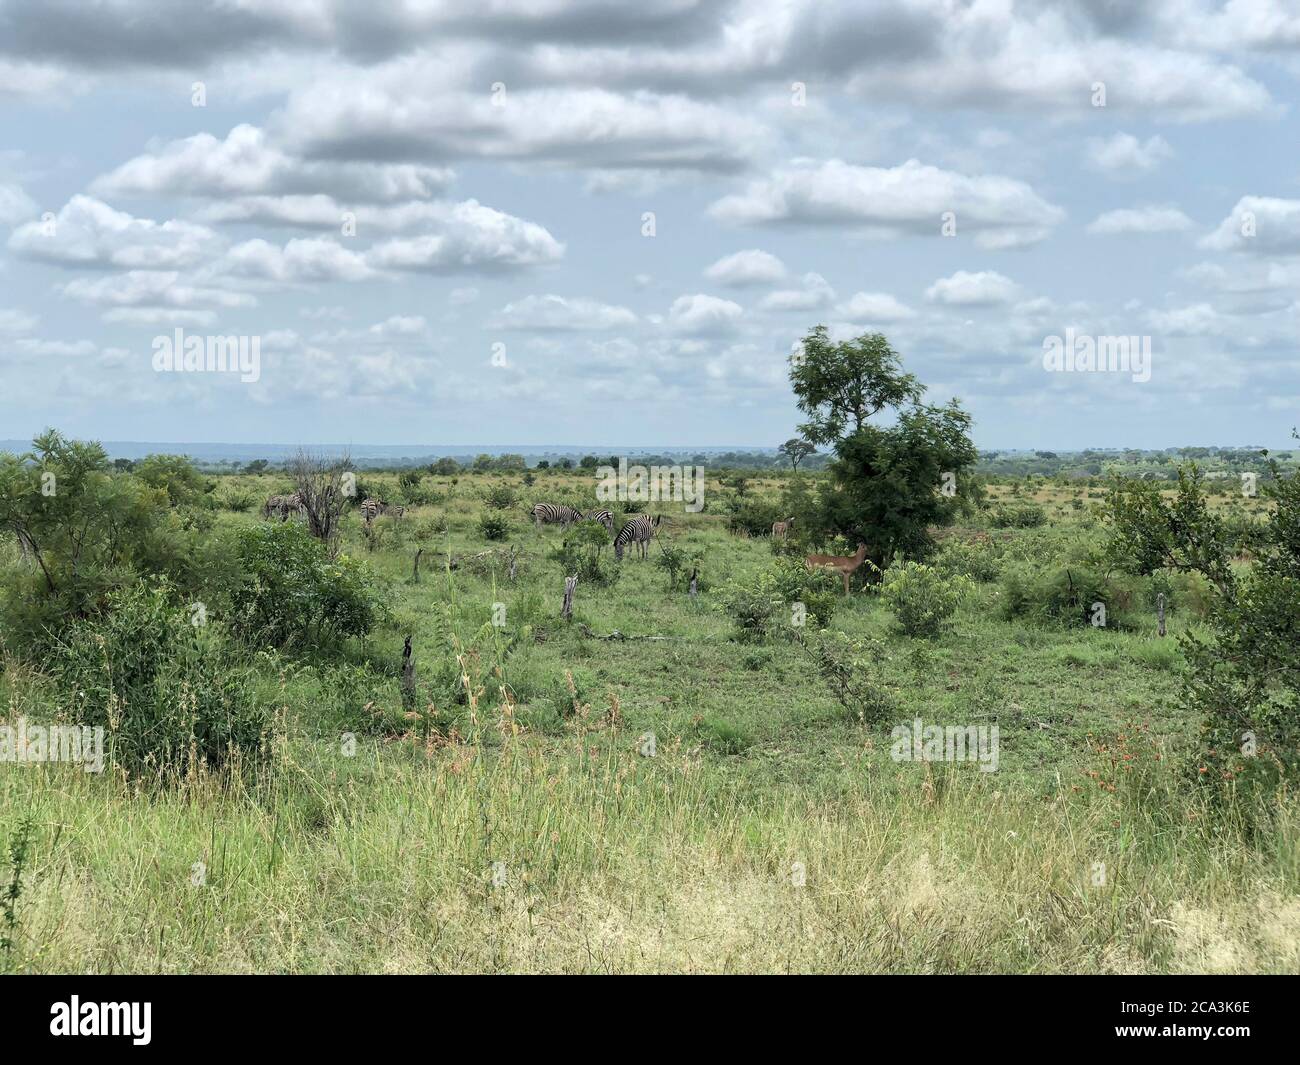 Grassland with wild safari animals in the background. Stock Photo